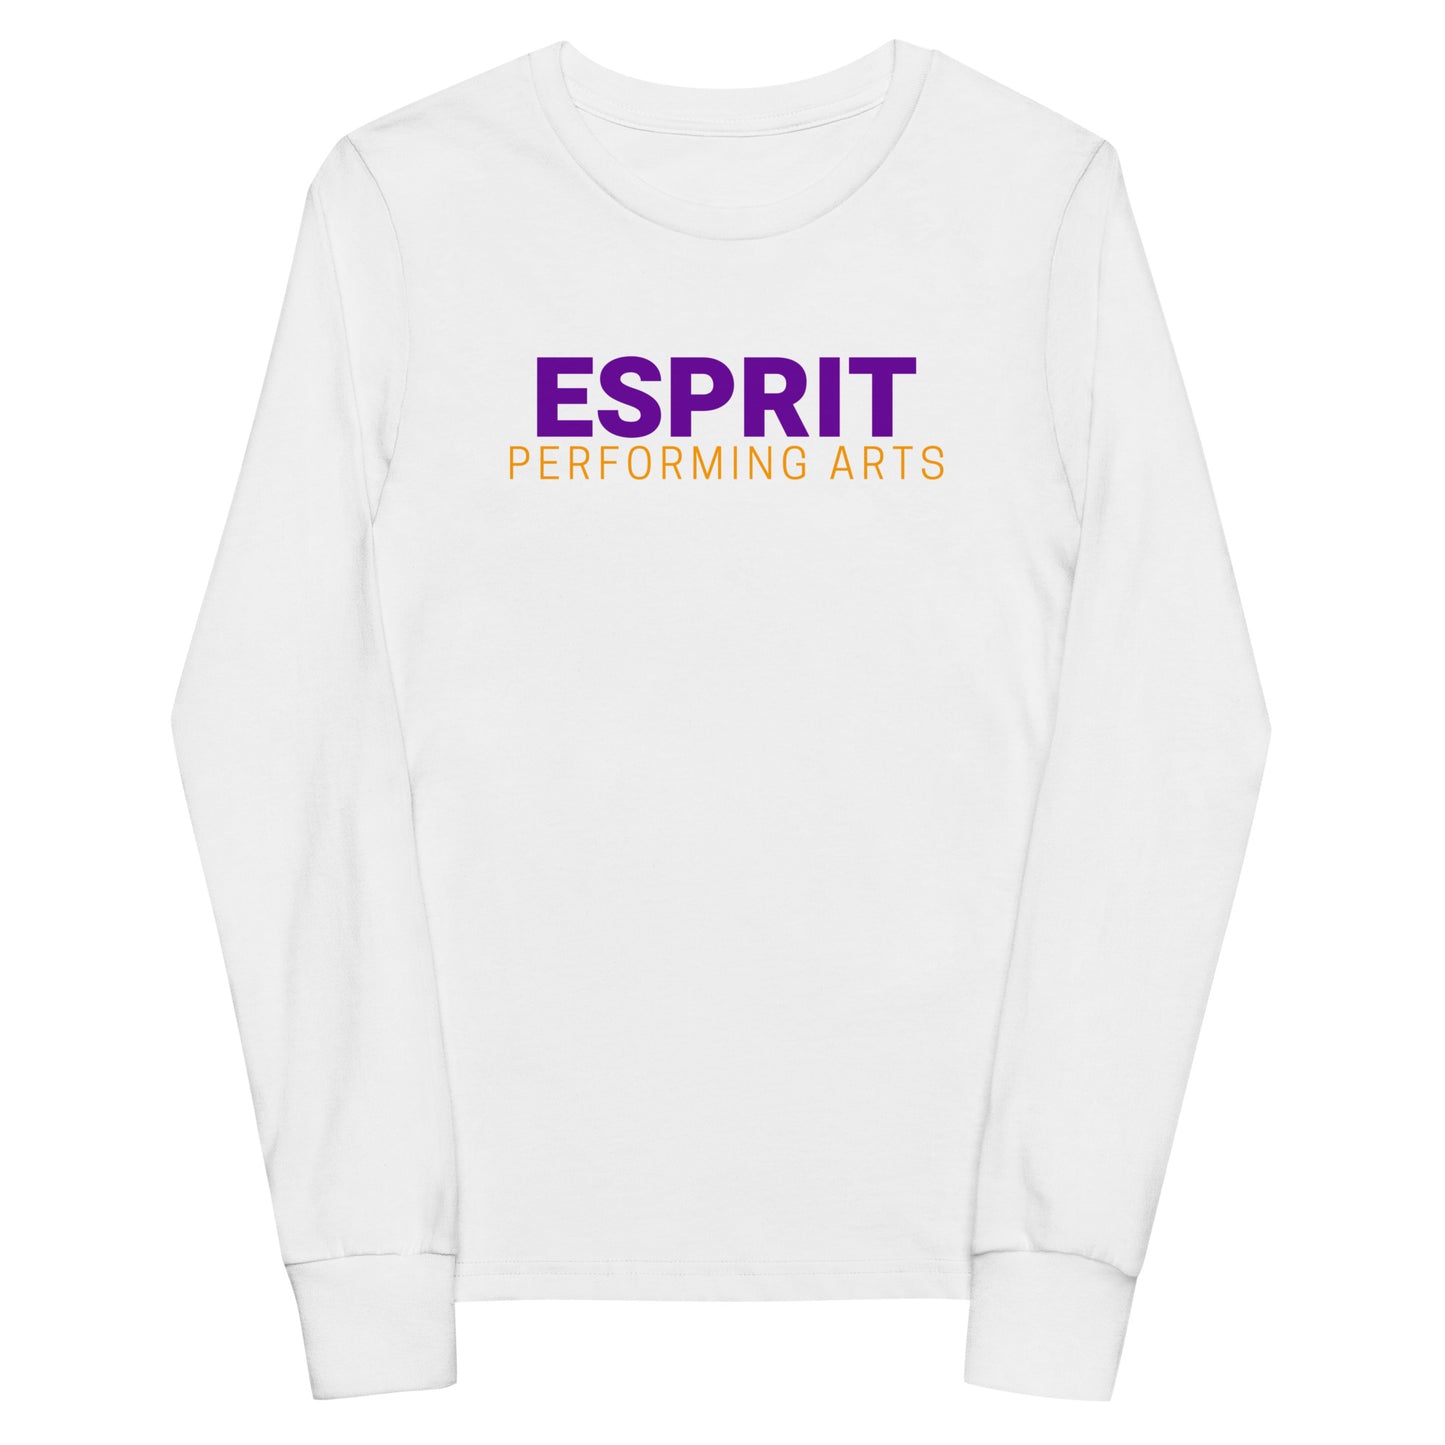 Esprit Performing Arts Logo T-Shirt - Long Sleeve - Youth